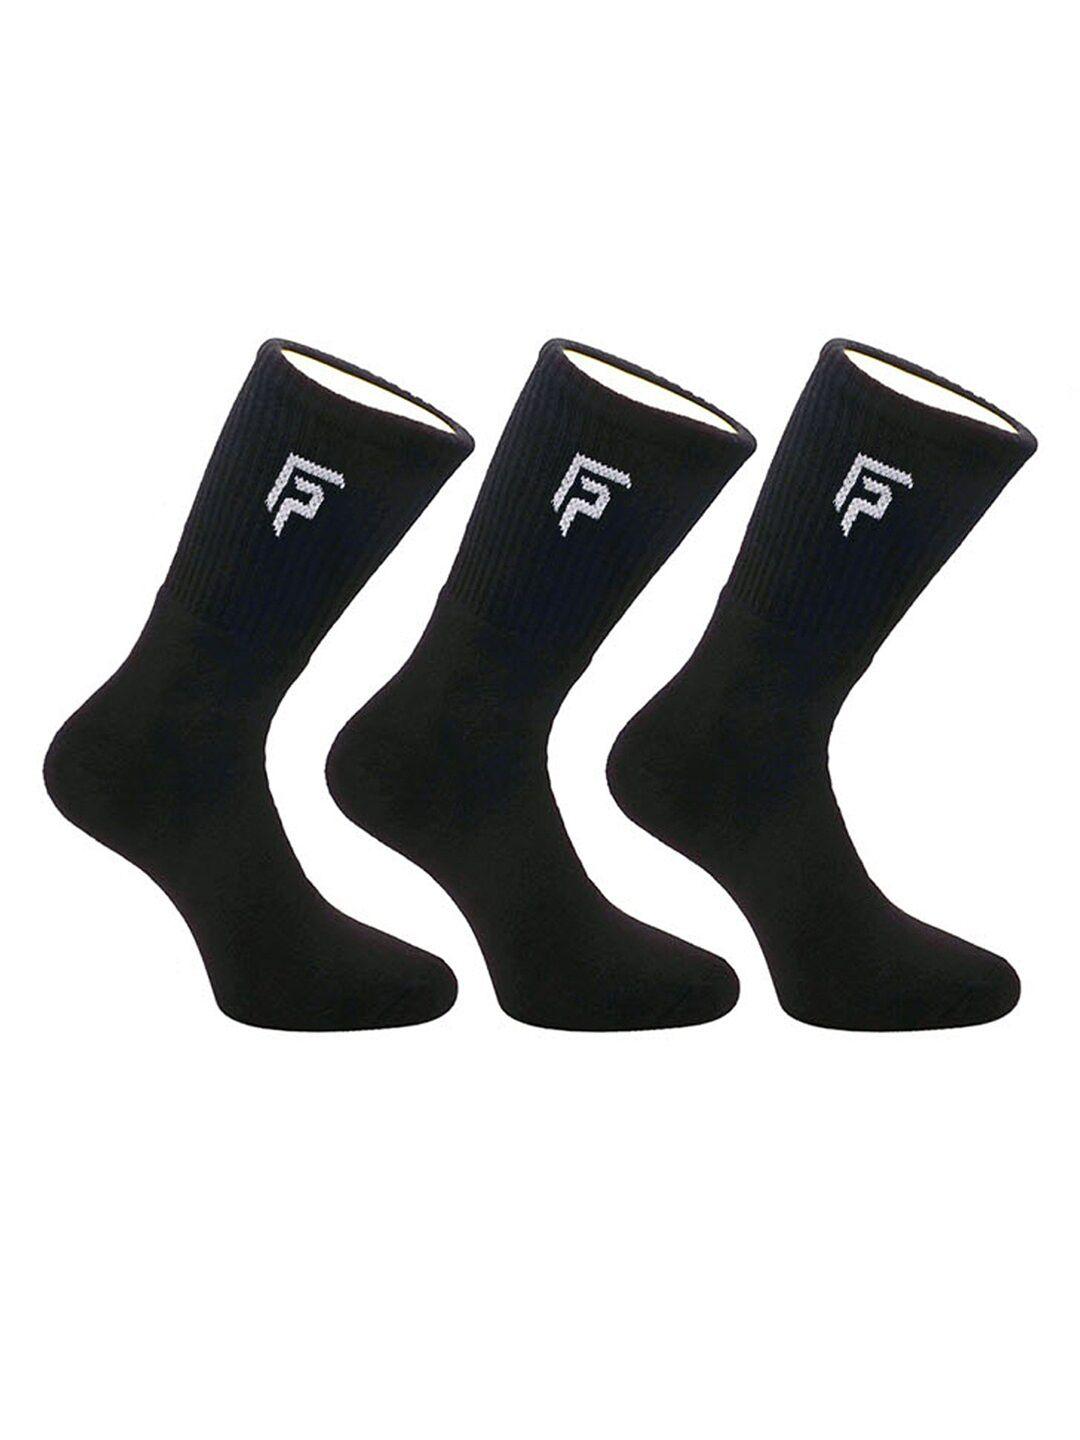 footprints pack of 3 black solid bamboo cotton calf length socks